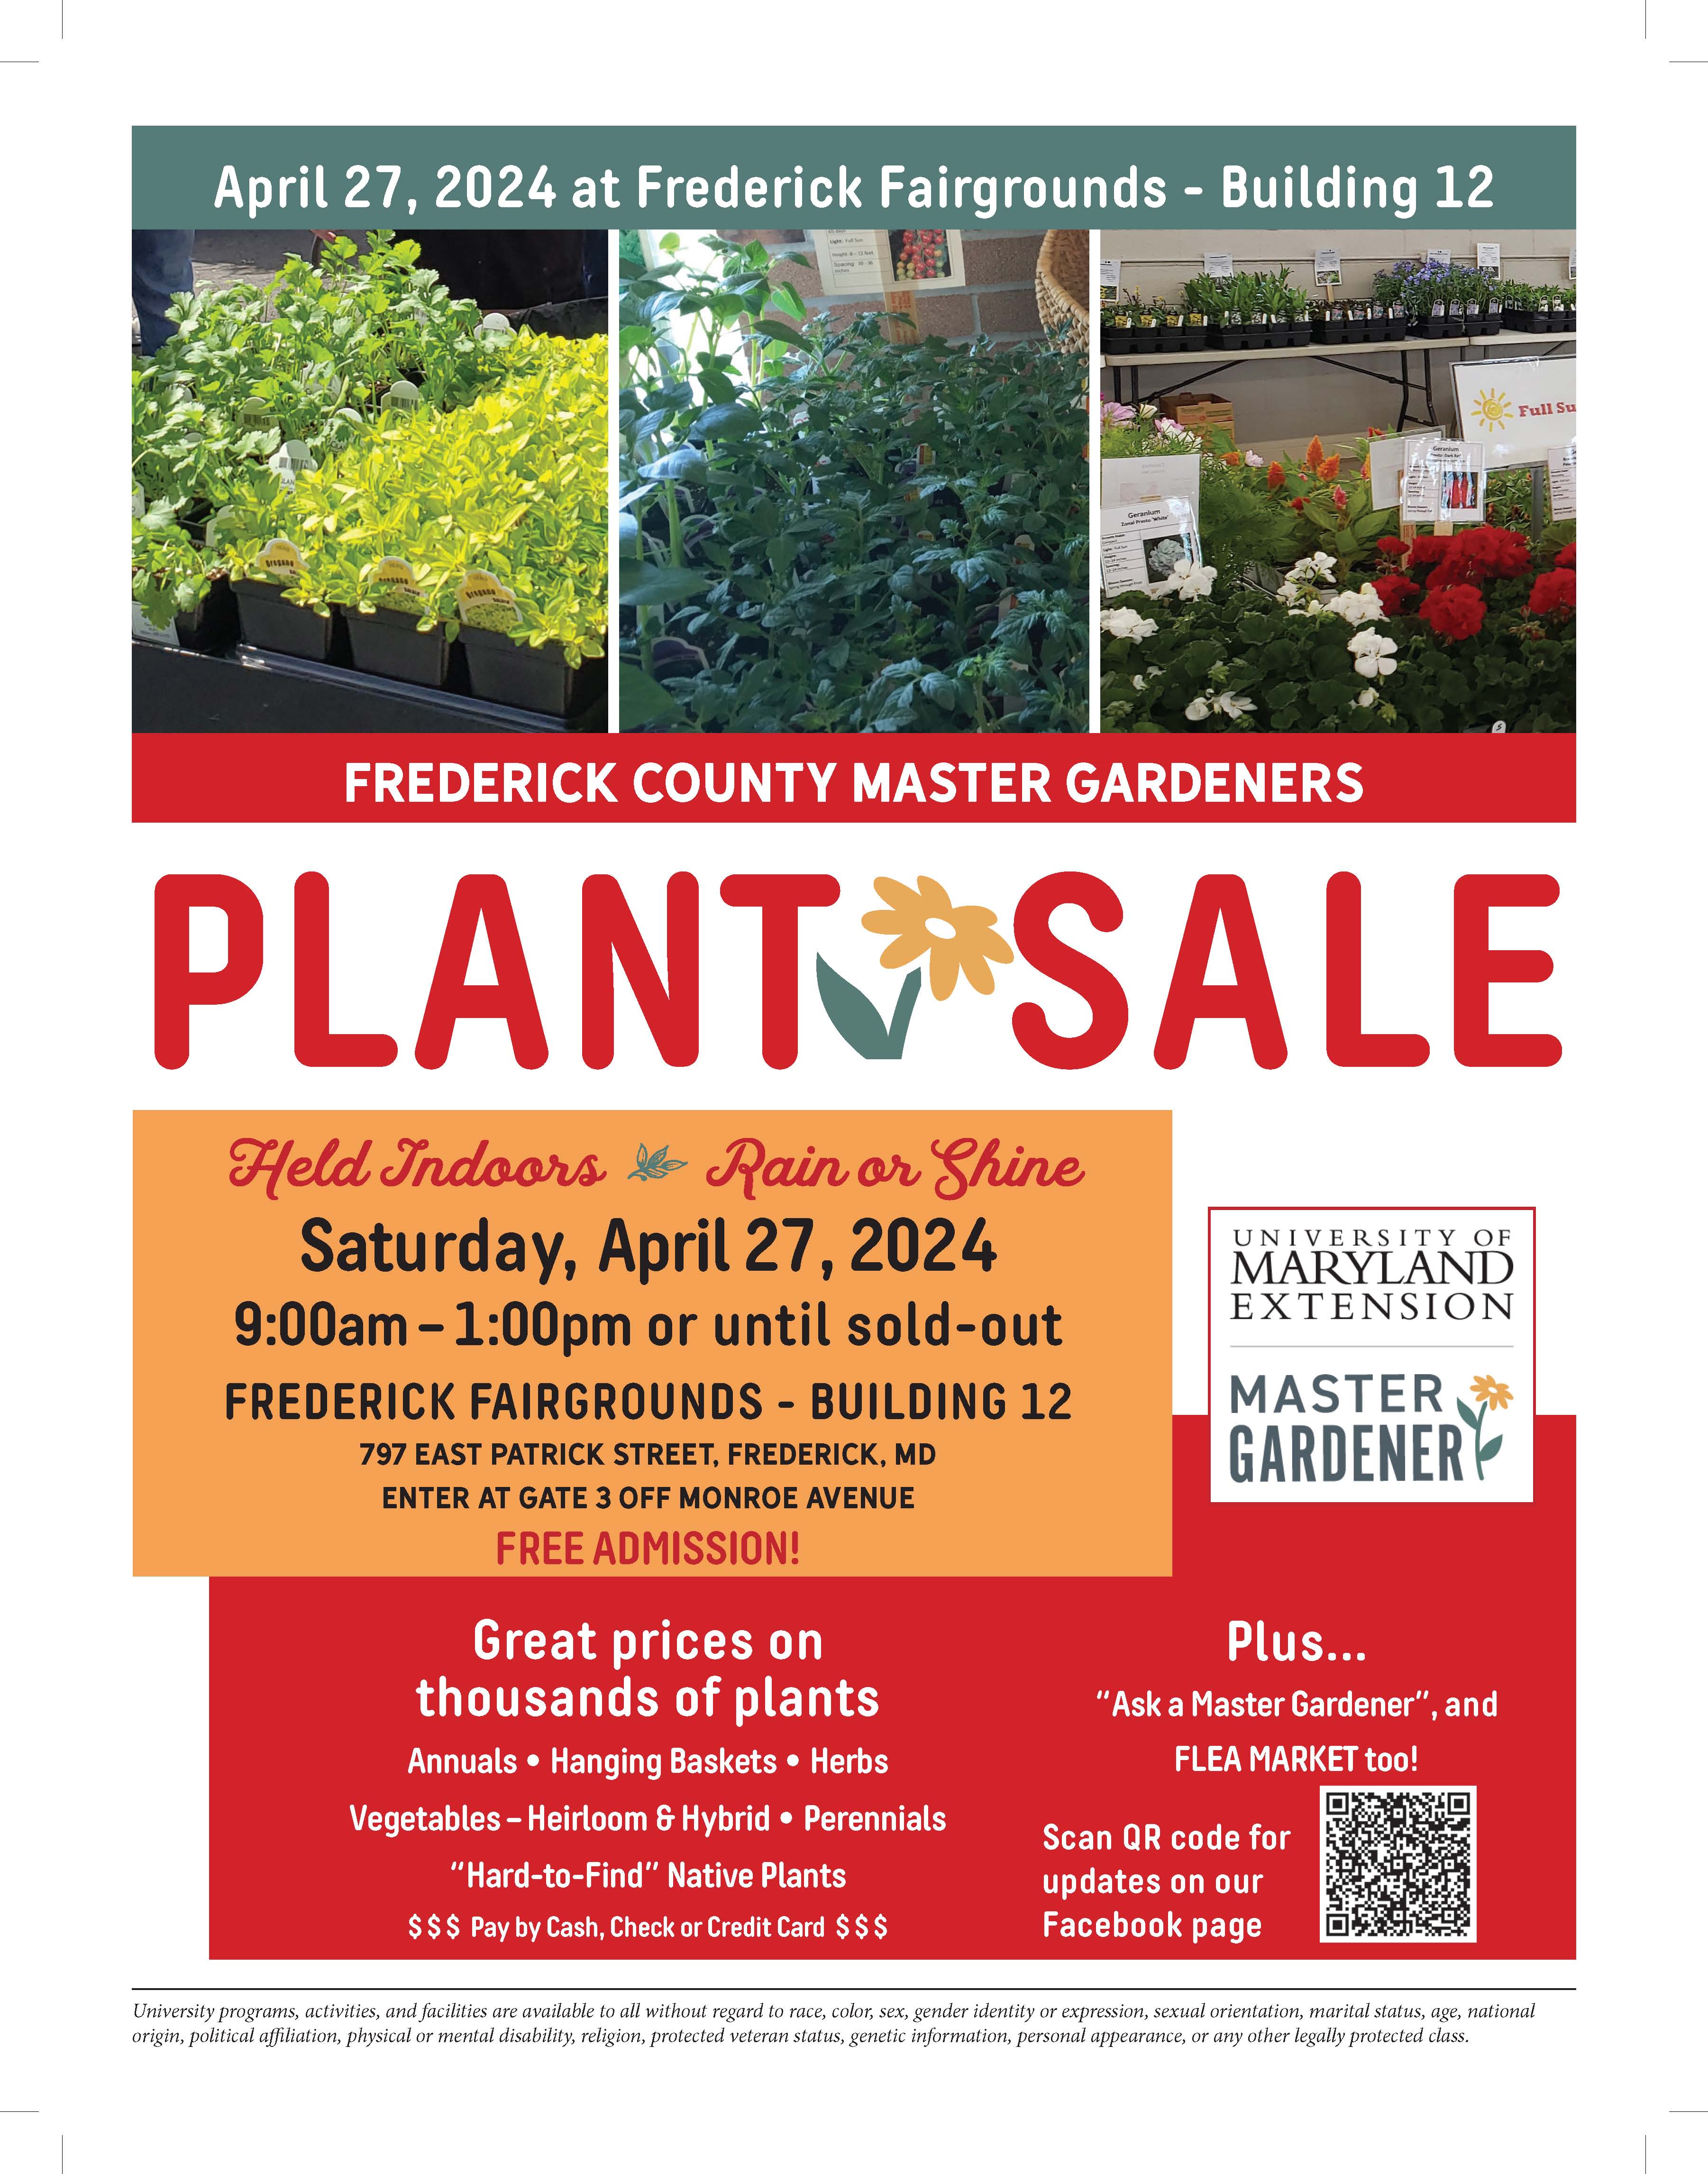 Frederick County Master Gardener Plant Sale flyer